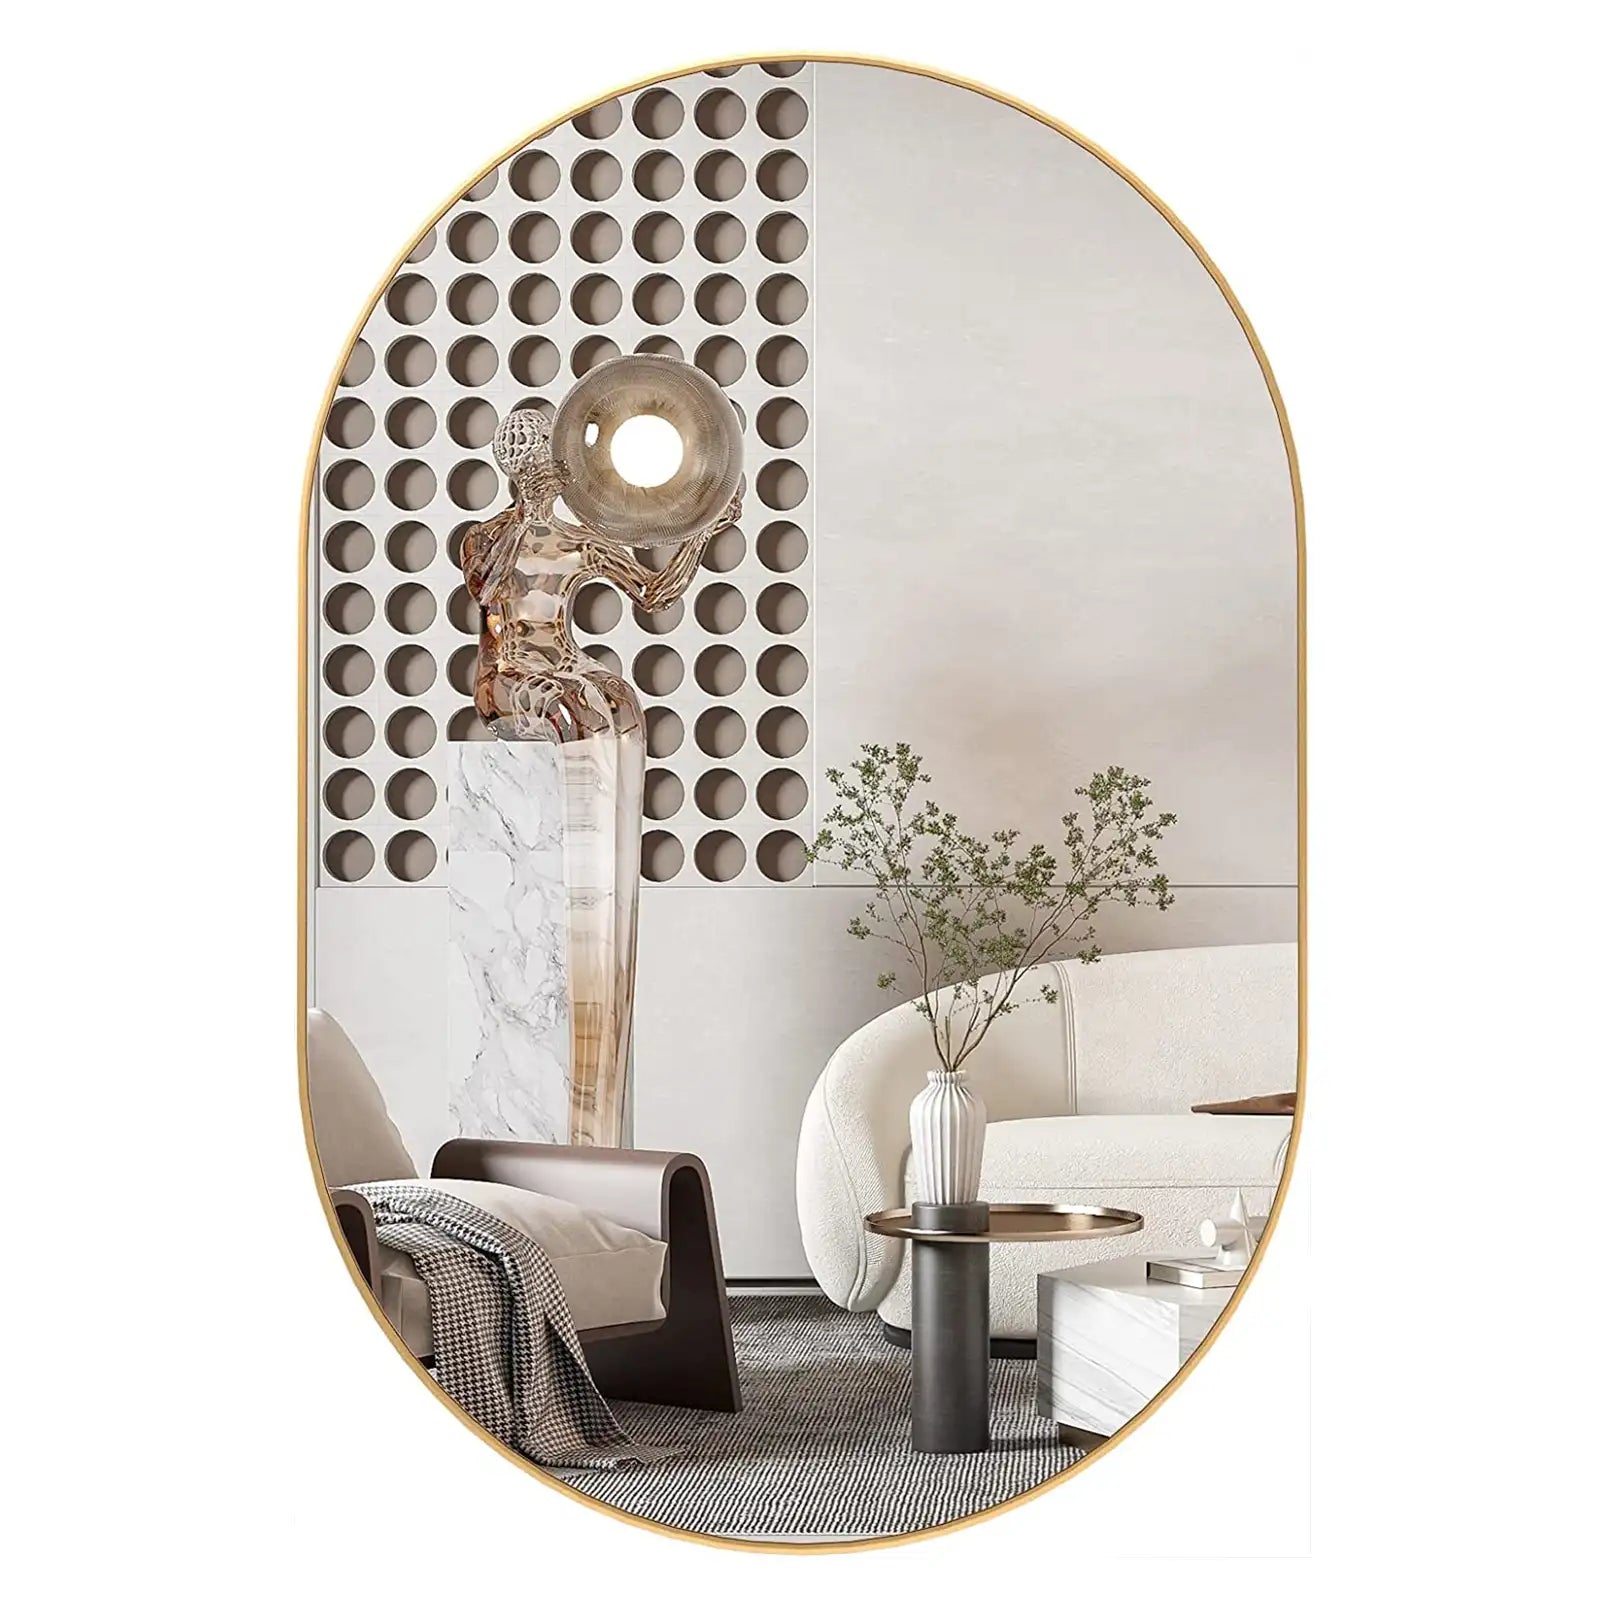 Oval Mirror, Round Mirror, Metal Frame Mirror, Hang Horizontally or Vertically Unique Wall Mounted Mirror, Golden Vanity Mirror for Living Room, Bathroom, Bedroom, Entryway